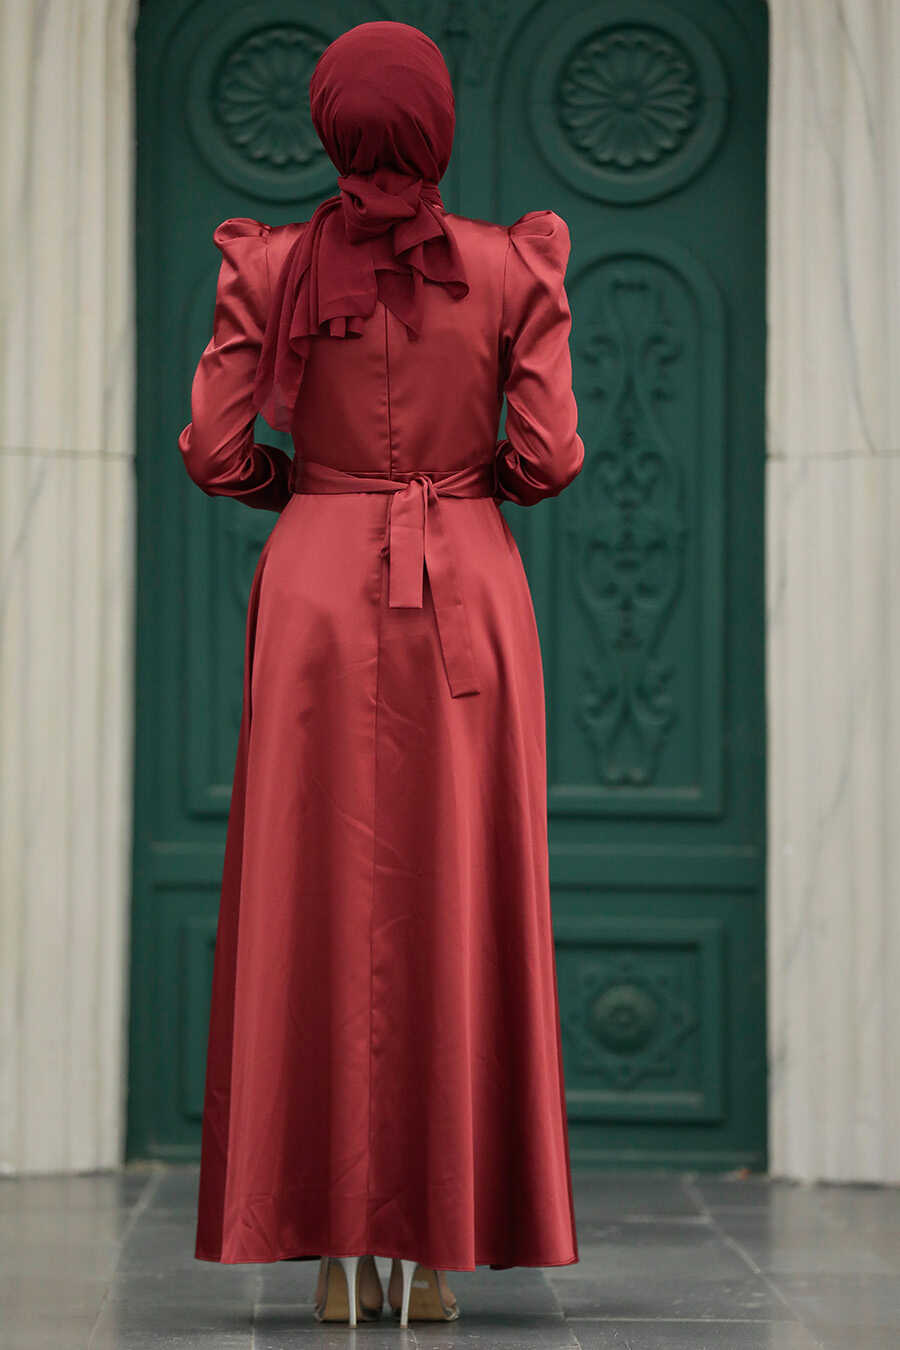  Satin Claret Red High Quality Dress 7725BR